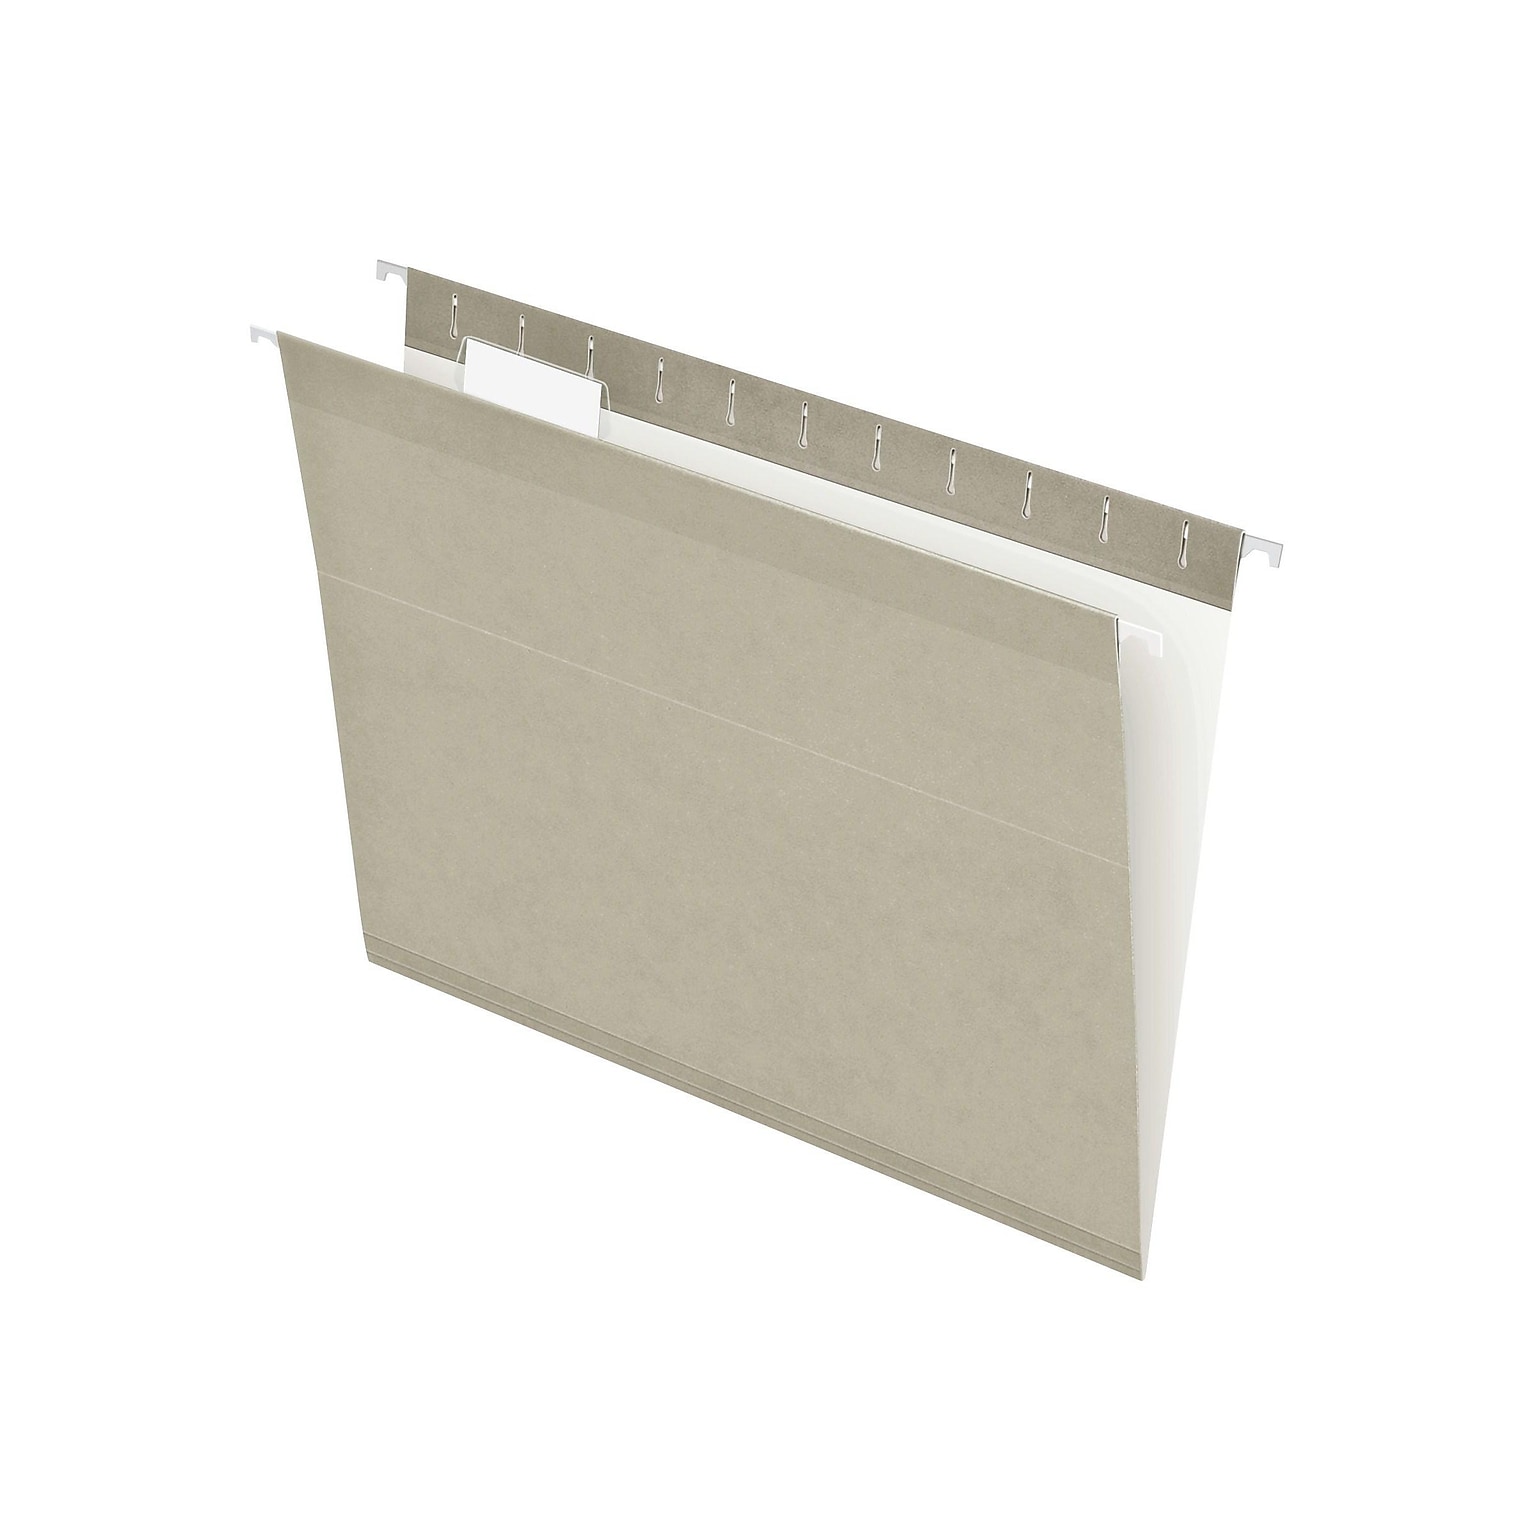 Pendaflex Reinforced Hanging File Folders, 1/5 Tab, Letter Size, Gray, 25/Box (PFX 4152 1/5 GRA)